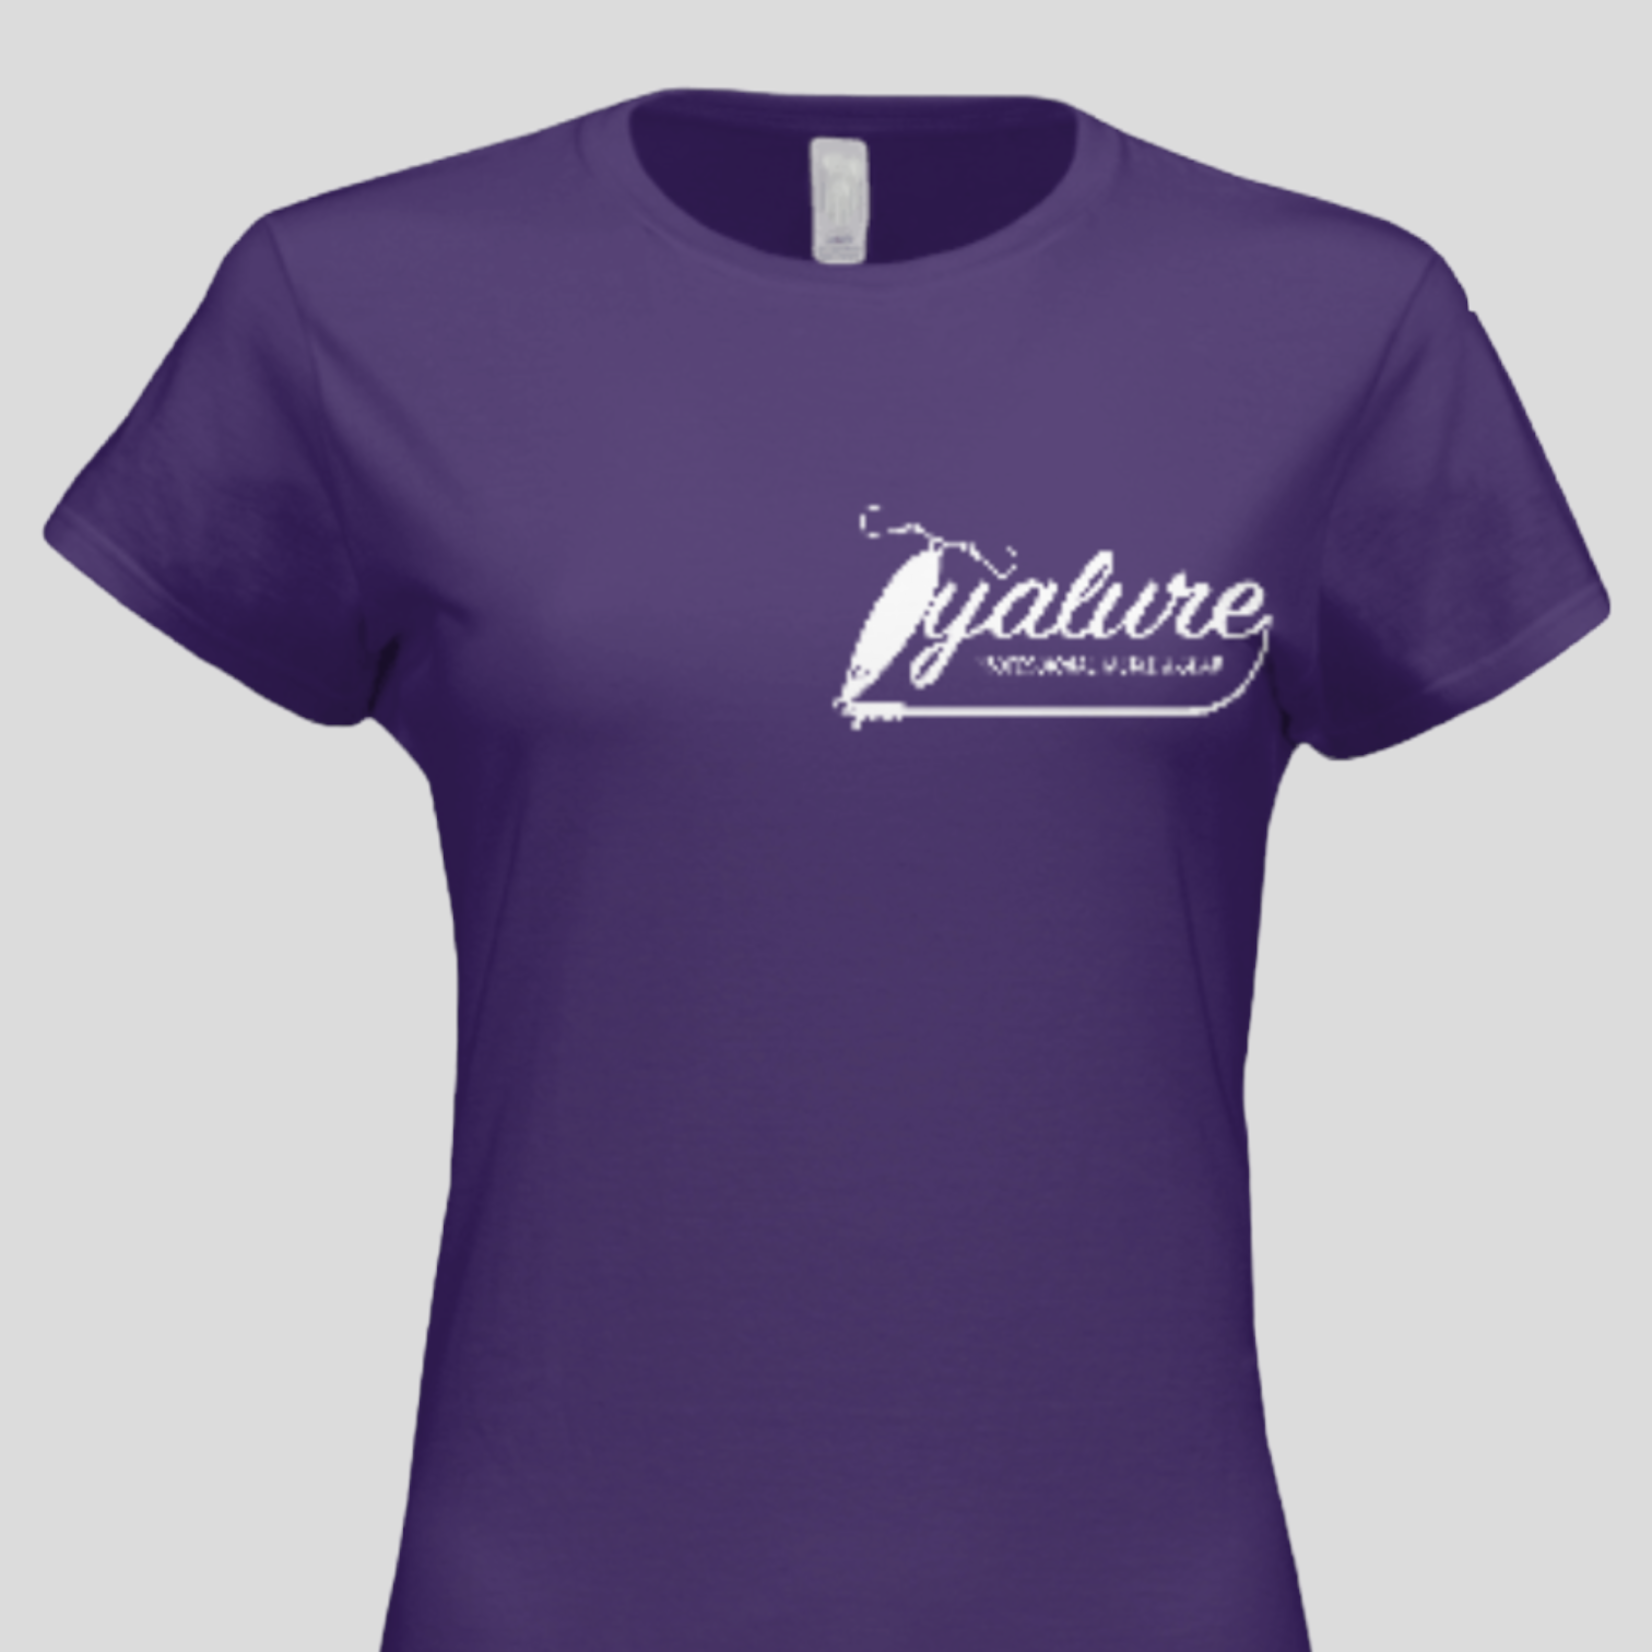 Rush Order Tees Tyalure Women's Fit T-Shirt